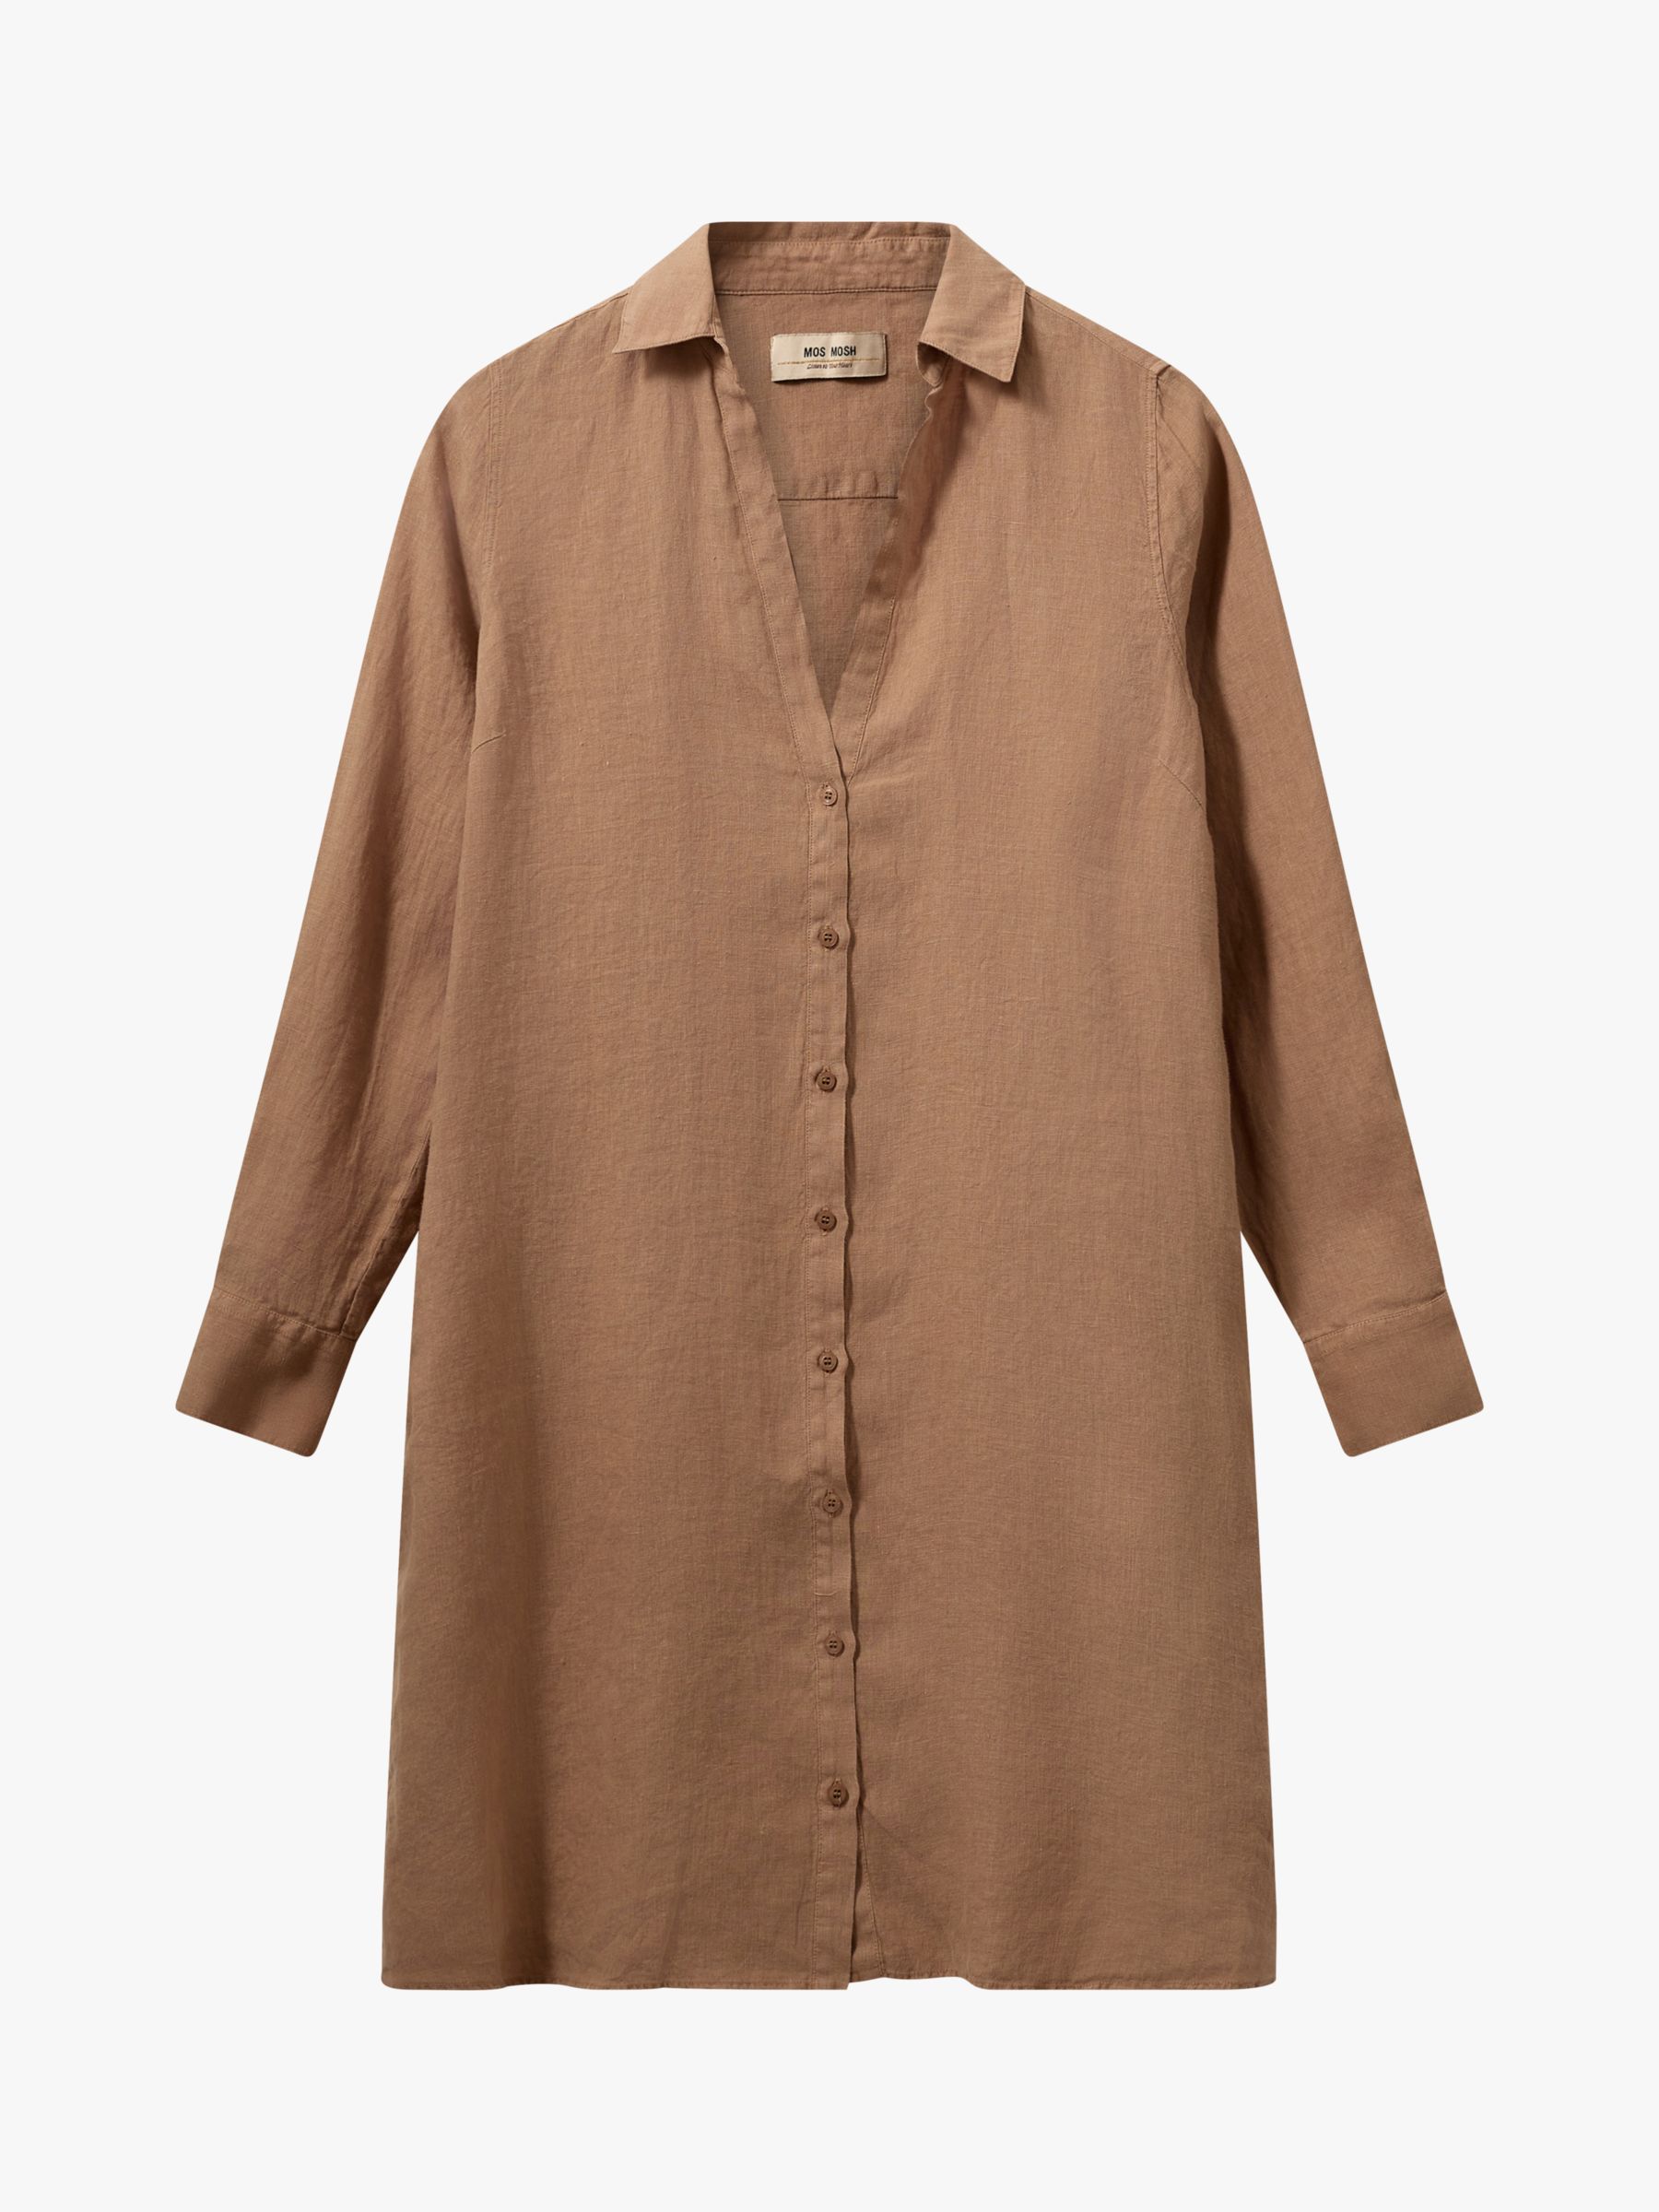 MOS MOSH Rielle Linen Shirt Dress, Cinnamon Swirl, M